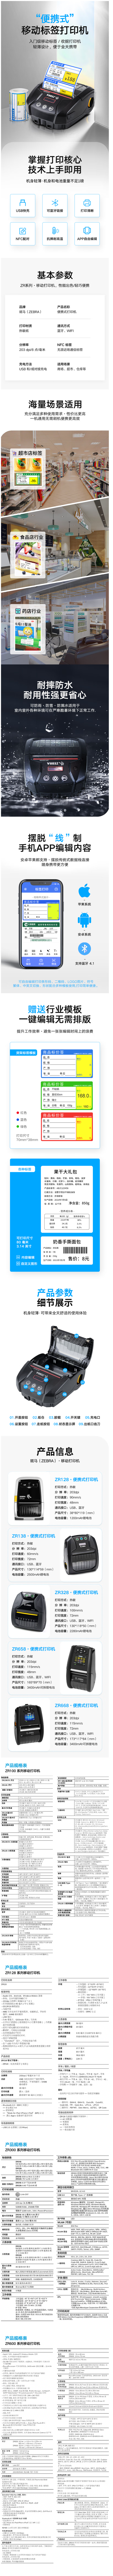 FireShot Capture 713 - 【斑马ZR138】斑马（ZEBRA）ZR138 蓝牙便携打印机 无线条码标签打印机（72mm宽）【行情 报价 价格 评测】-京东_ - i-item.jd.com.png